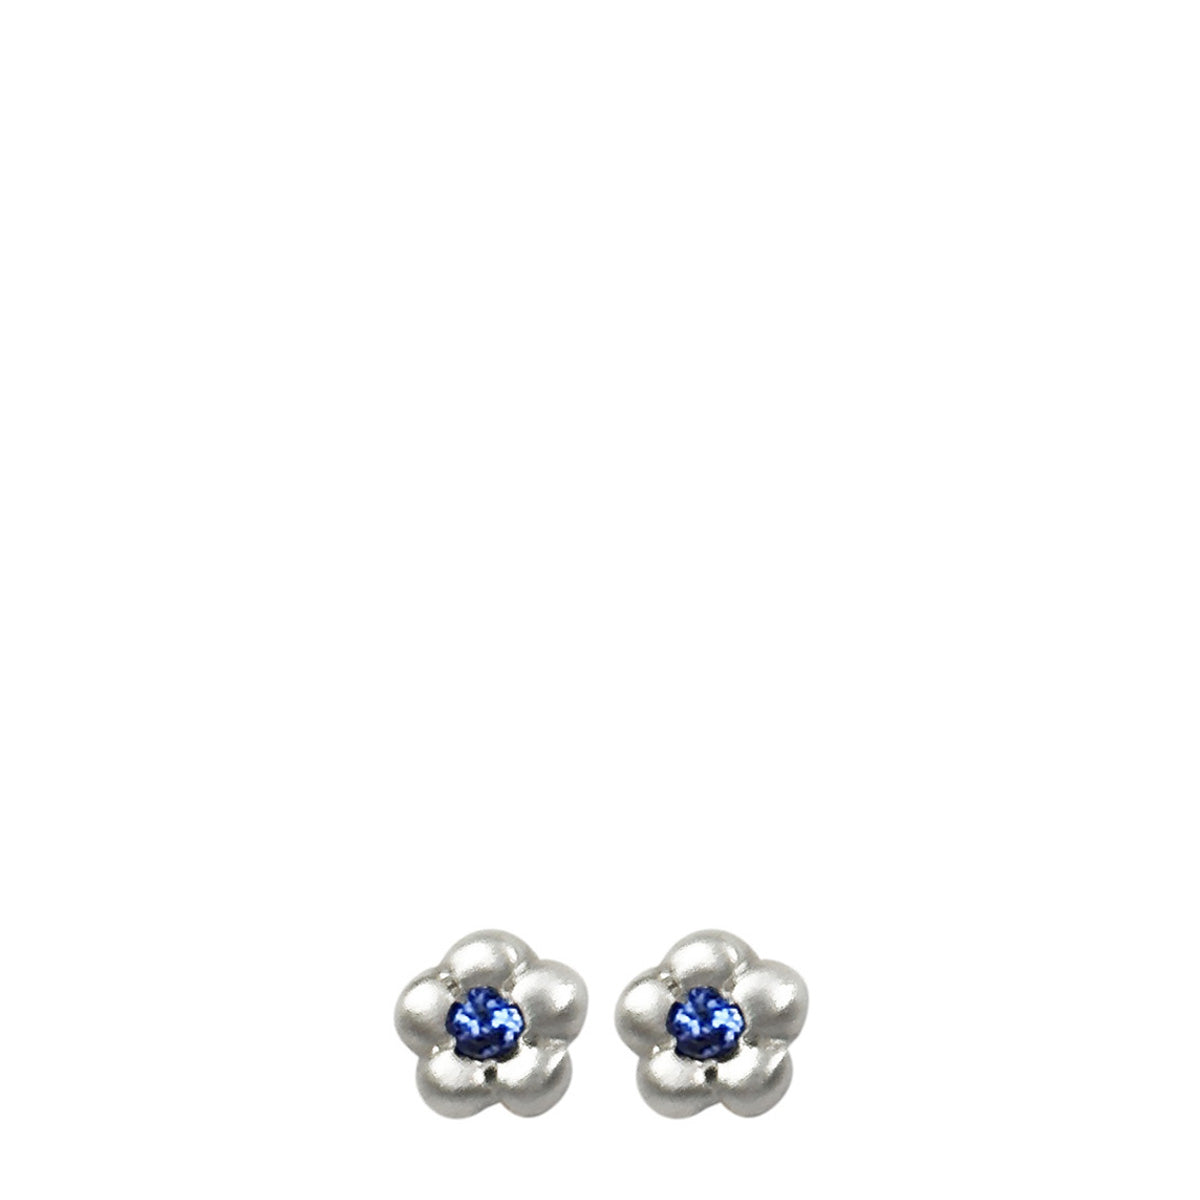 Sterling Silver Daisy Flower Stud Earrings with Blue Sapphire